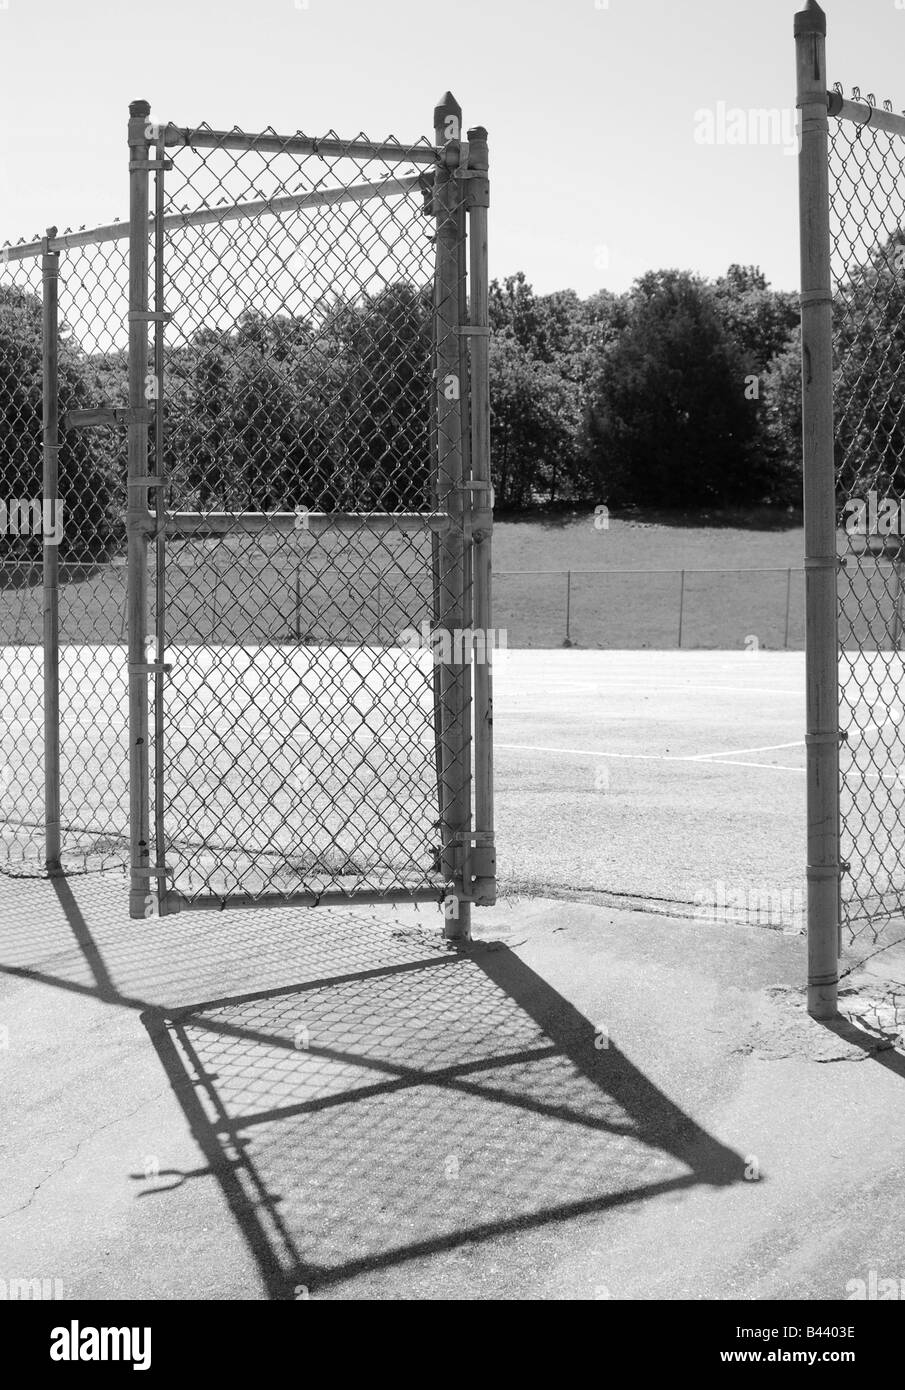 An open gate at a basketball court Stock Photo